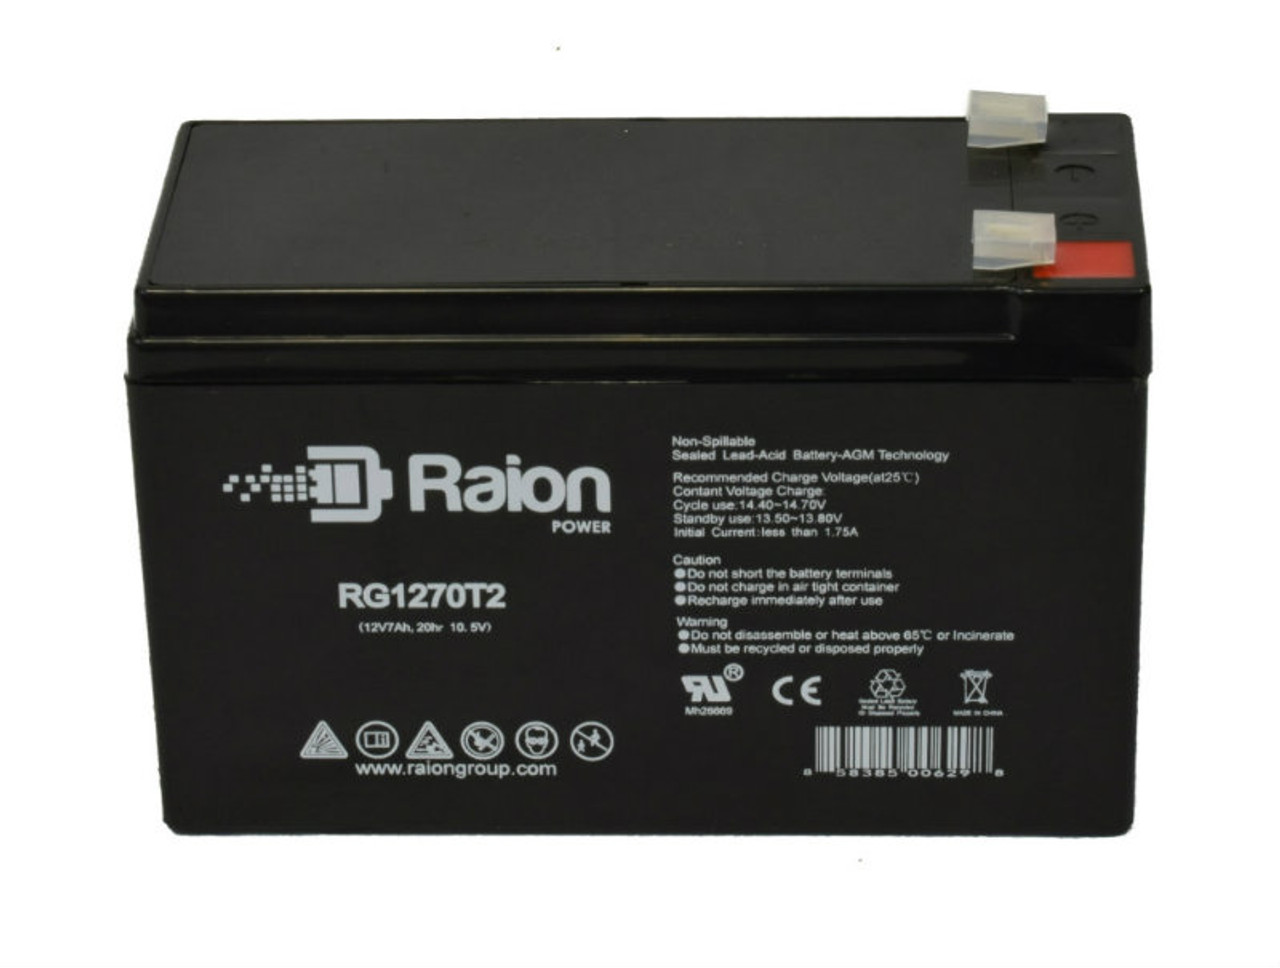 Raion Power RG1270T2 12V 7Ah Lead Acid Battery for Daymak Mini Countryman